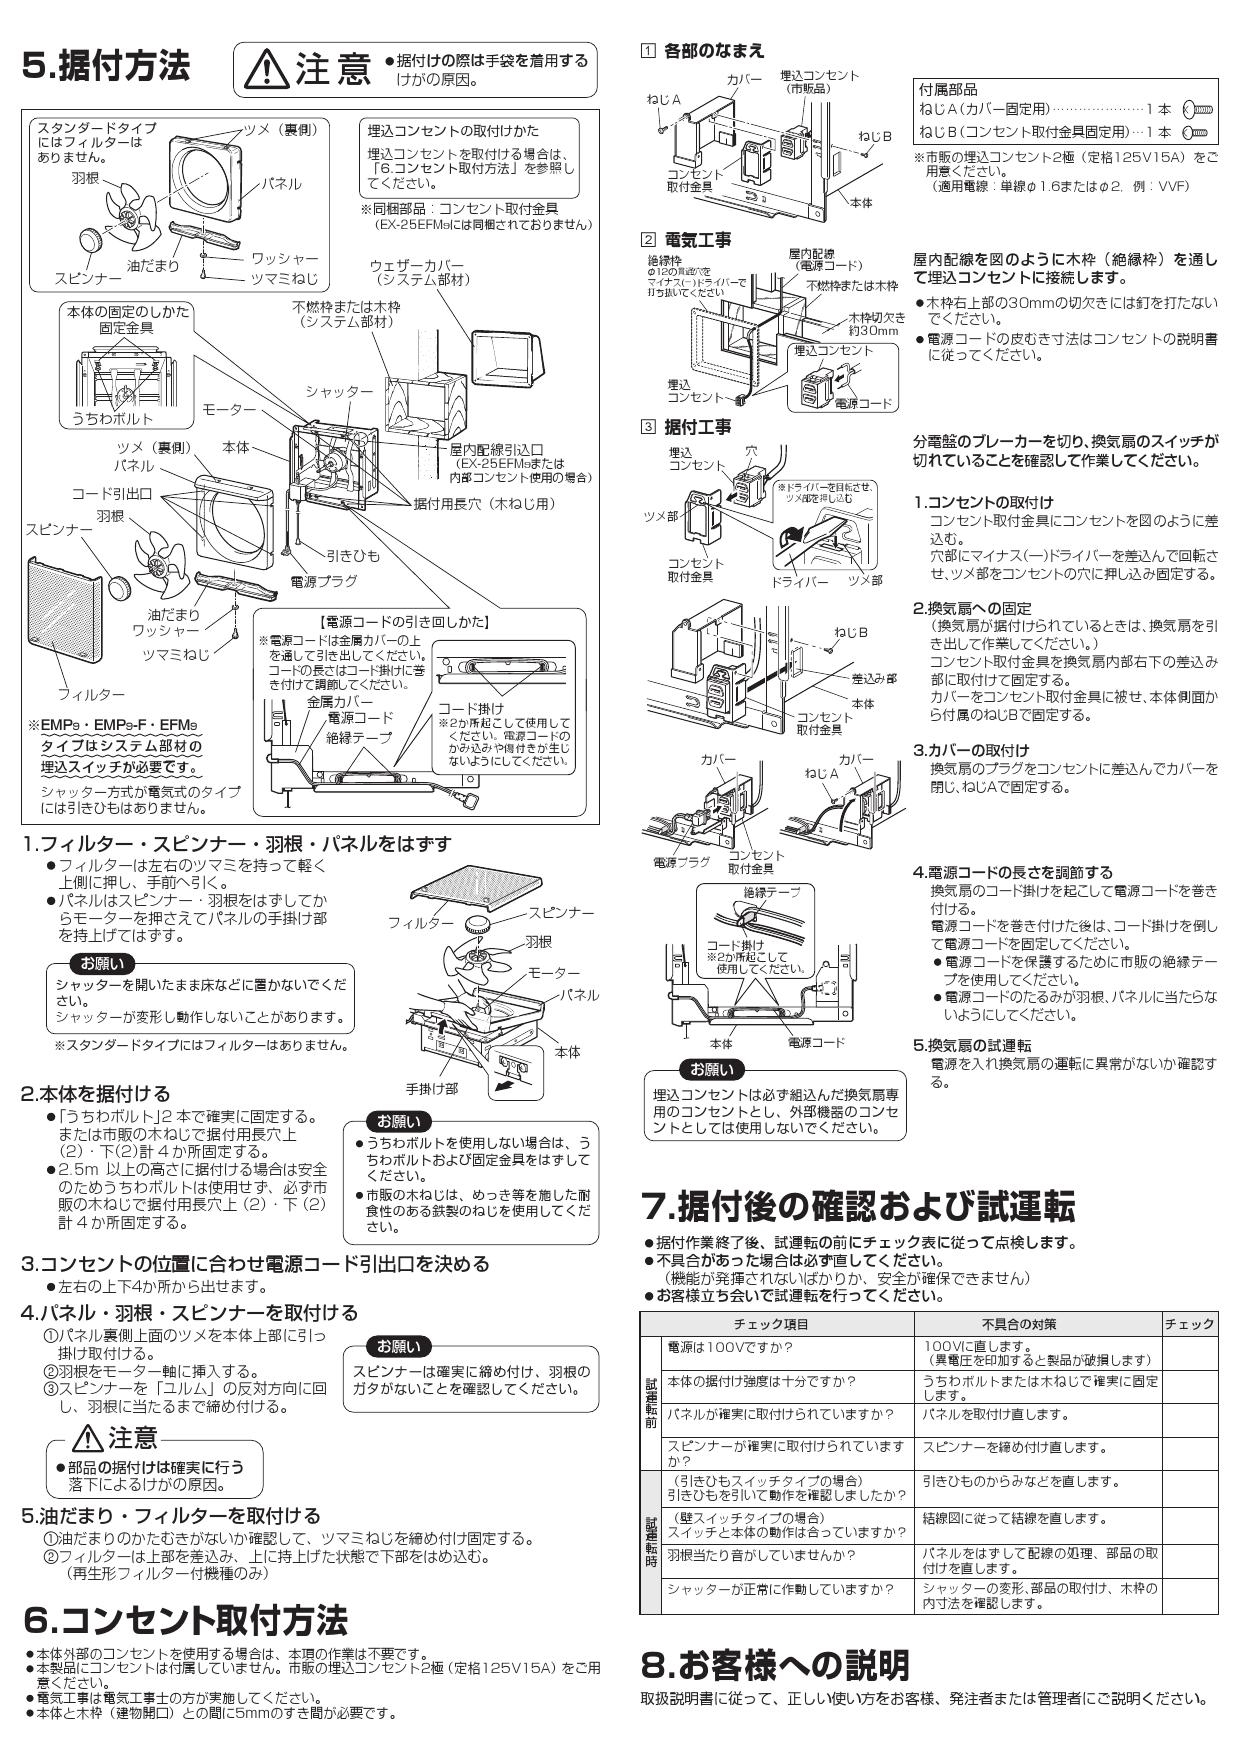 生活家電 三菱電機換気扇 EX-25EMP9-F | cubeselection.com